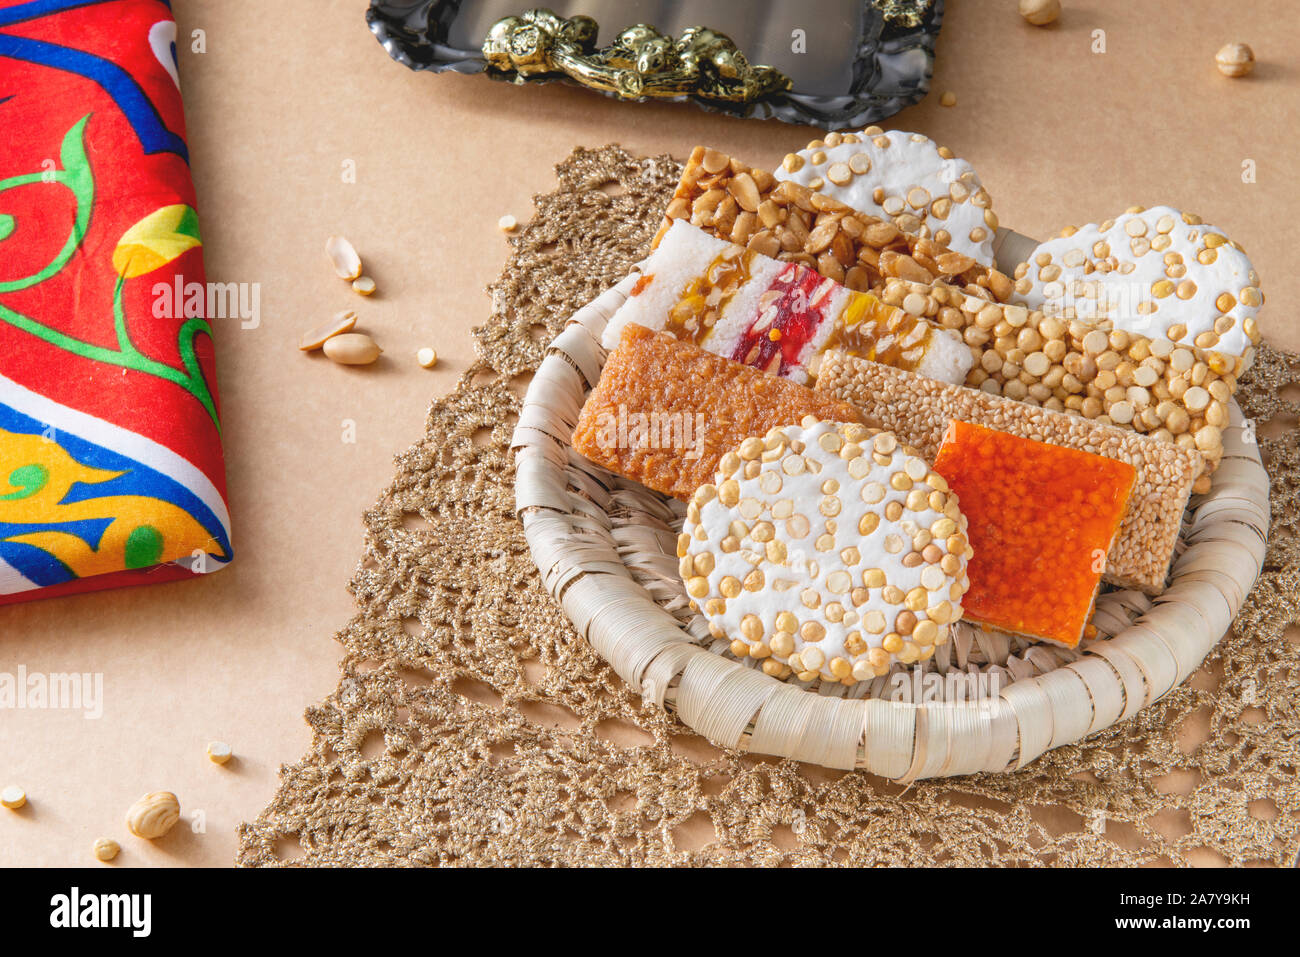 Ägyptische traditionelle Prophet Muhammad Geburtstagsfeier Desserts, die ägyptische Kultur Stockfoto